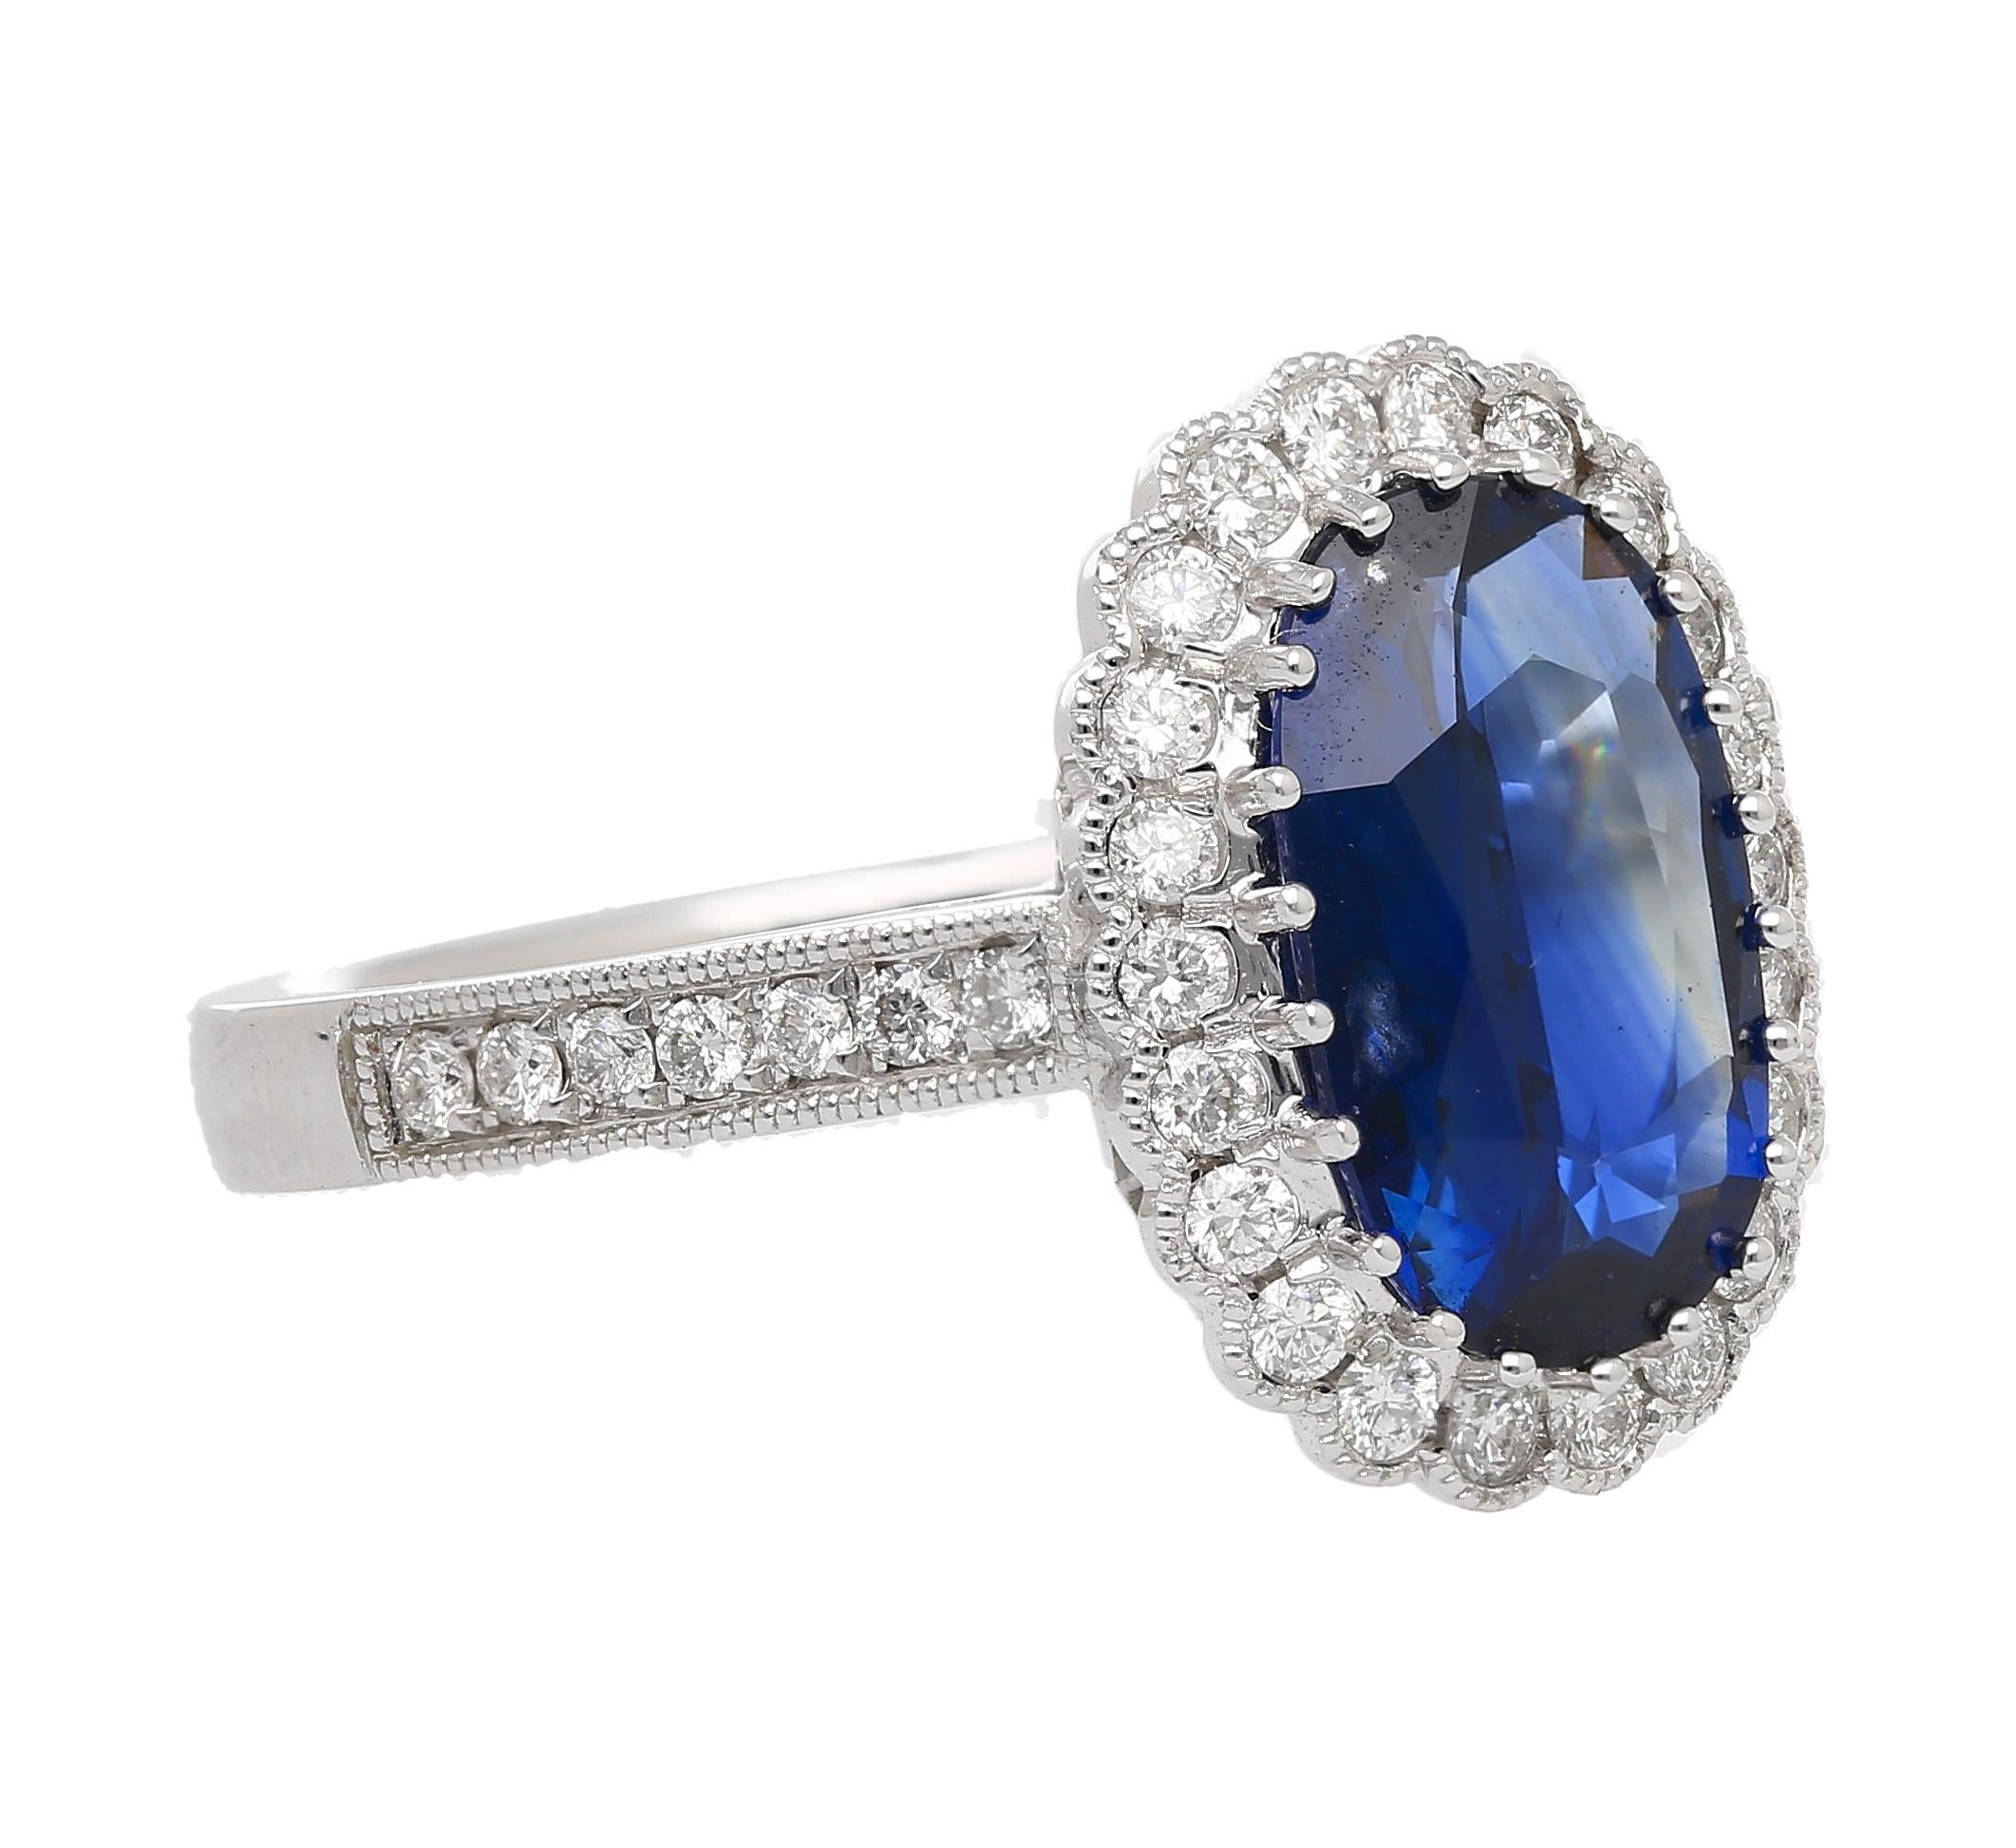 Vintage 2.38 Carat No Heat Oval Blue Sapphire & Milgrain Finish Diamond Ring